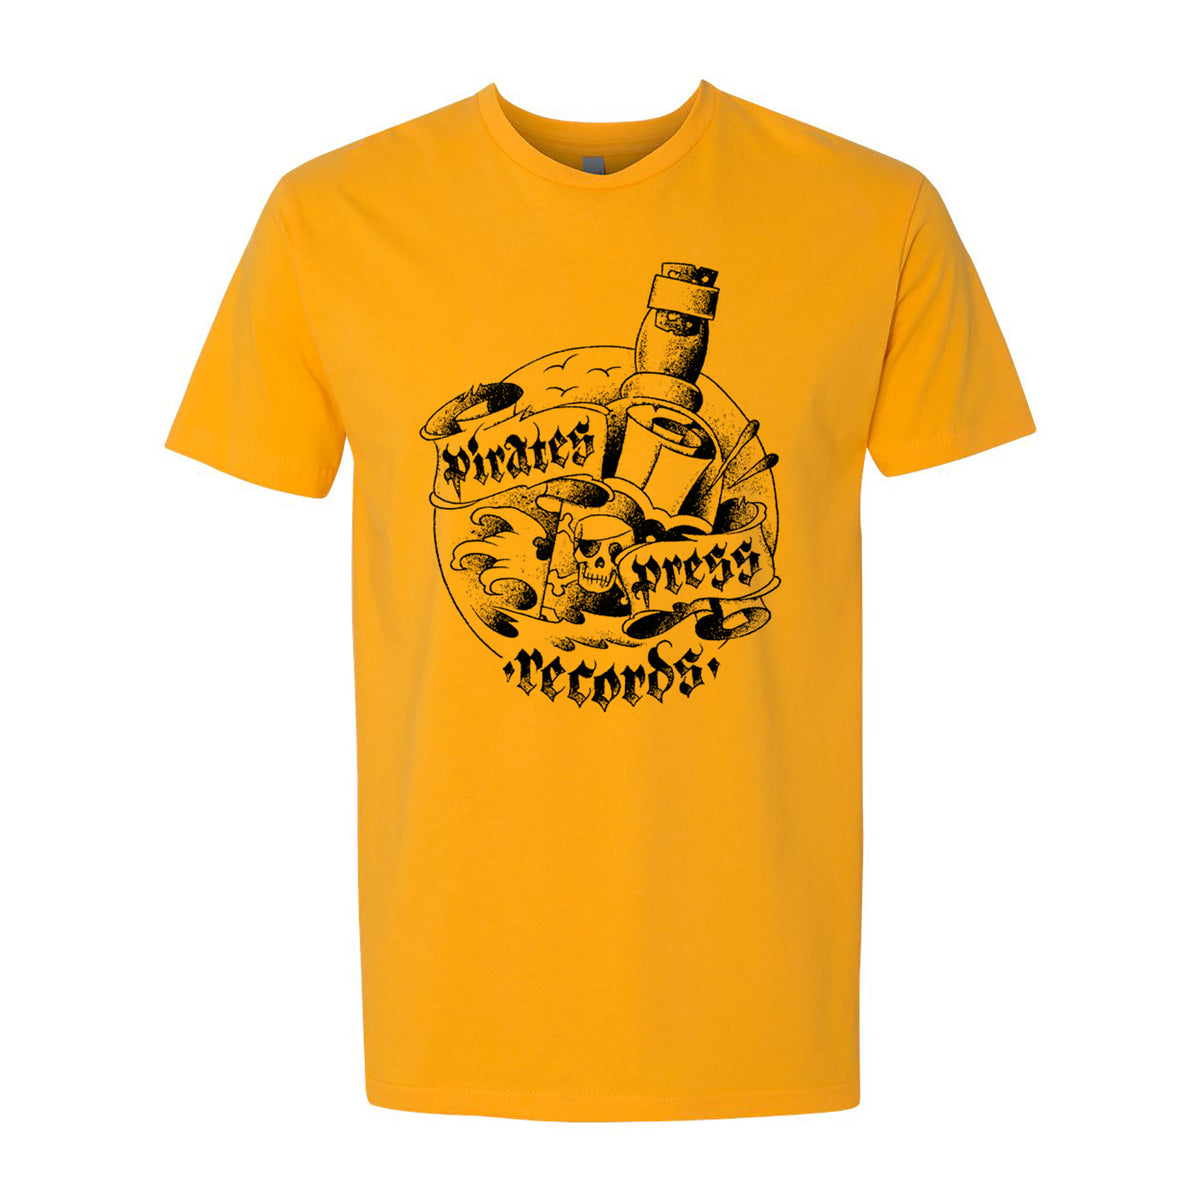 Pirates Press Records - Bottle - Black on Yellow - T-Shirt